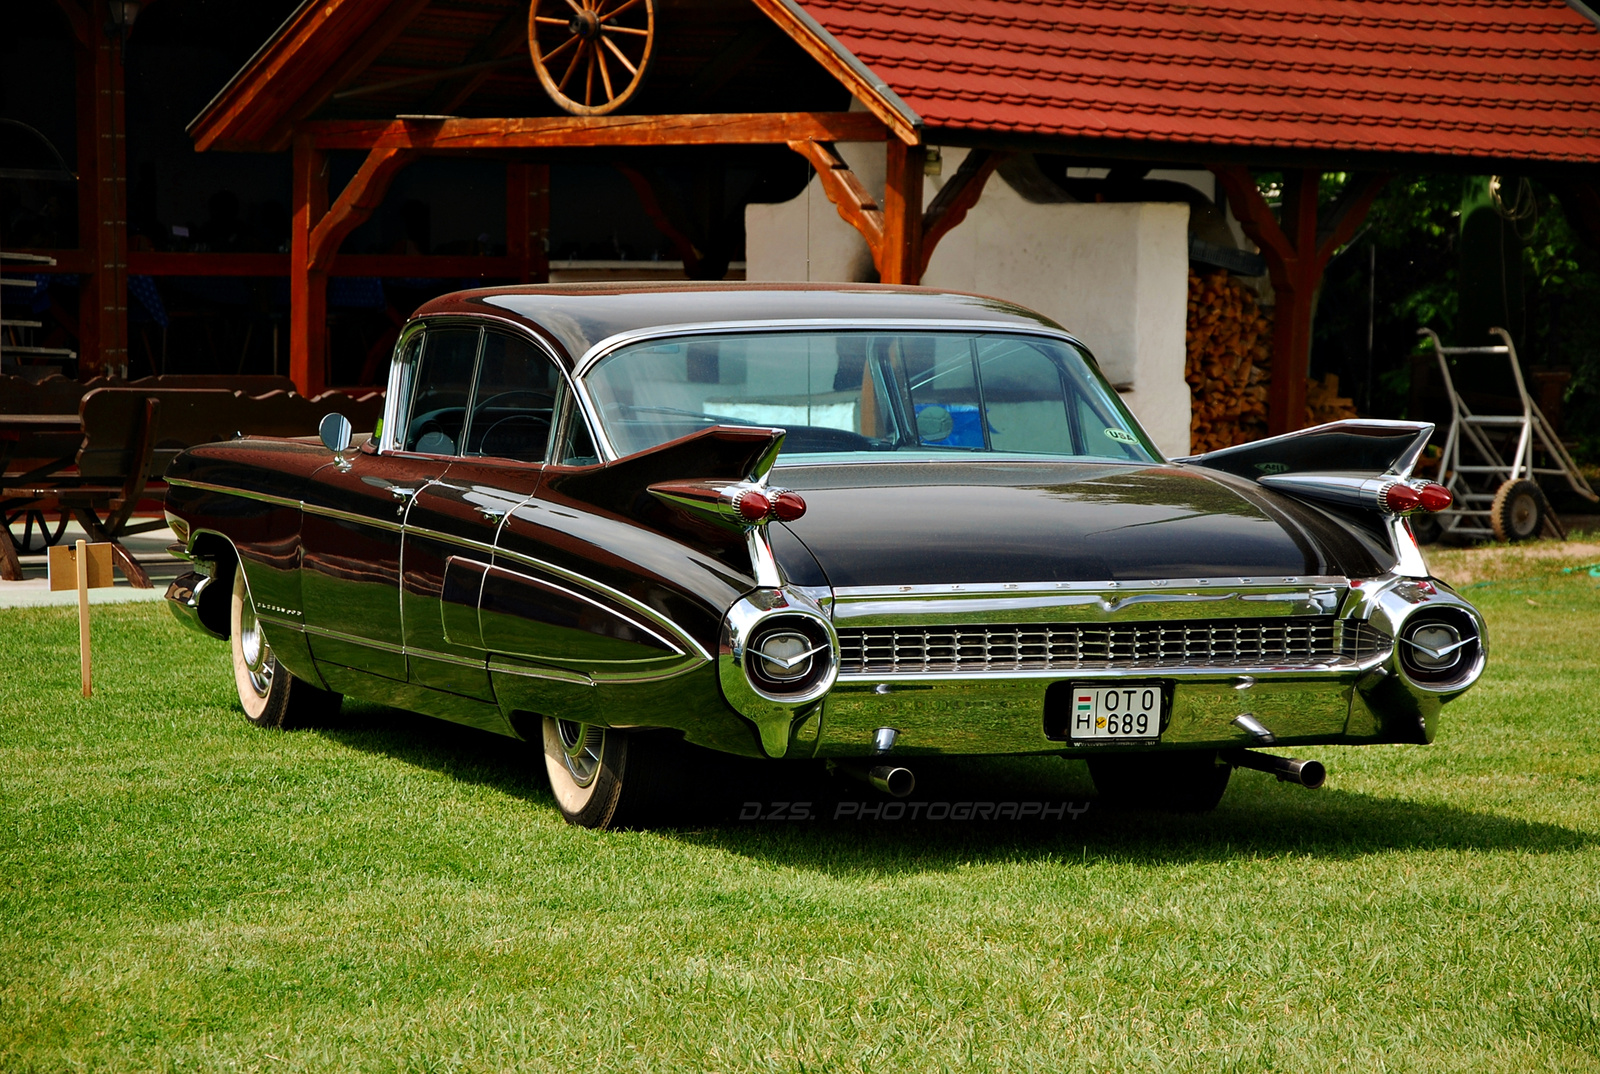 '59 Cadillac Fletwood